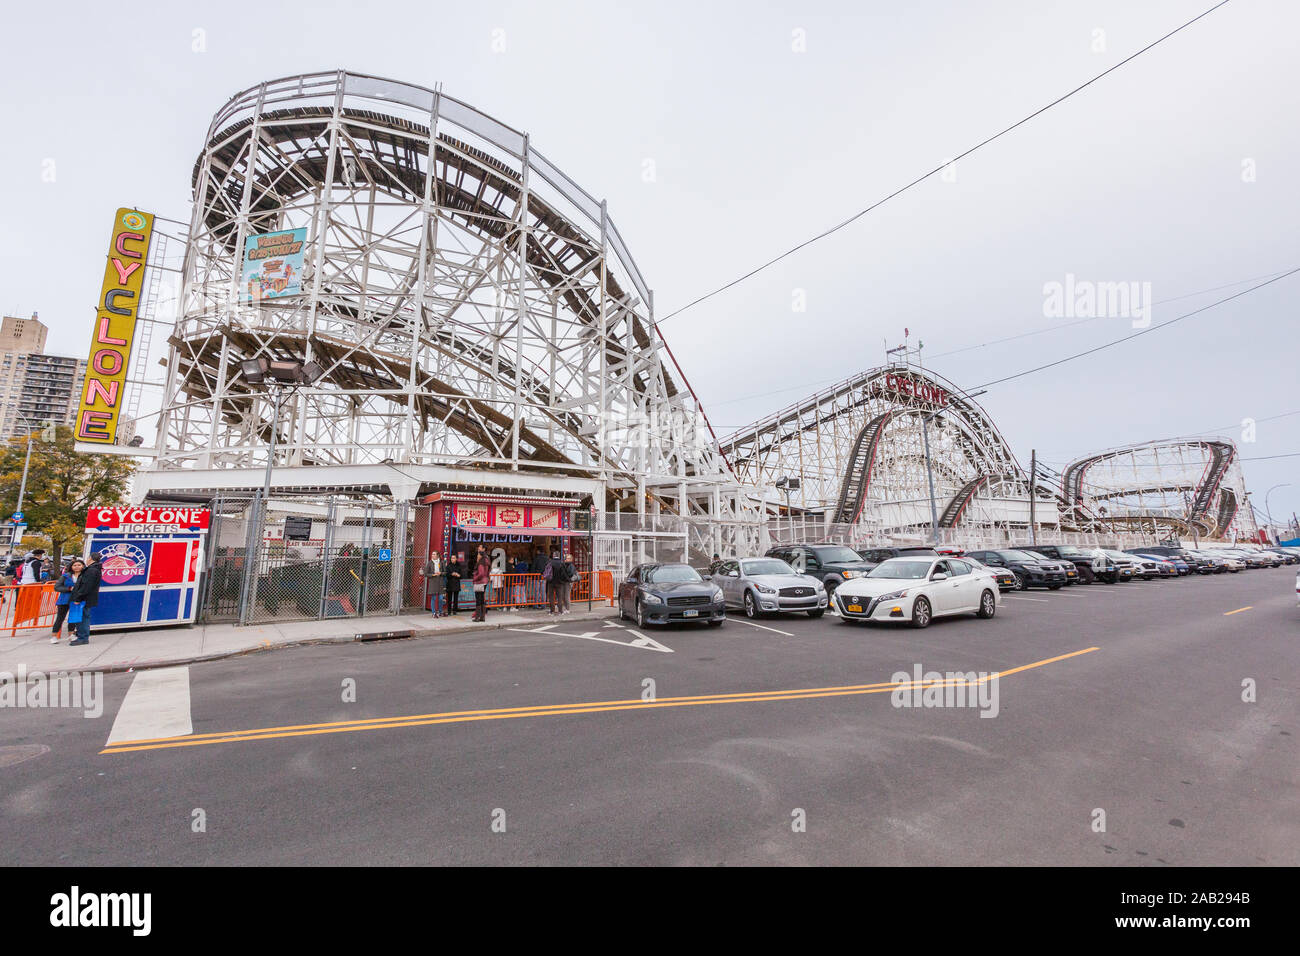 Cyclone roller coaster, Coney Island, Brooklyn, New York, United States of America. Stock Photo